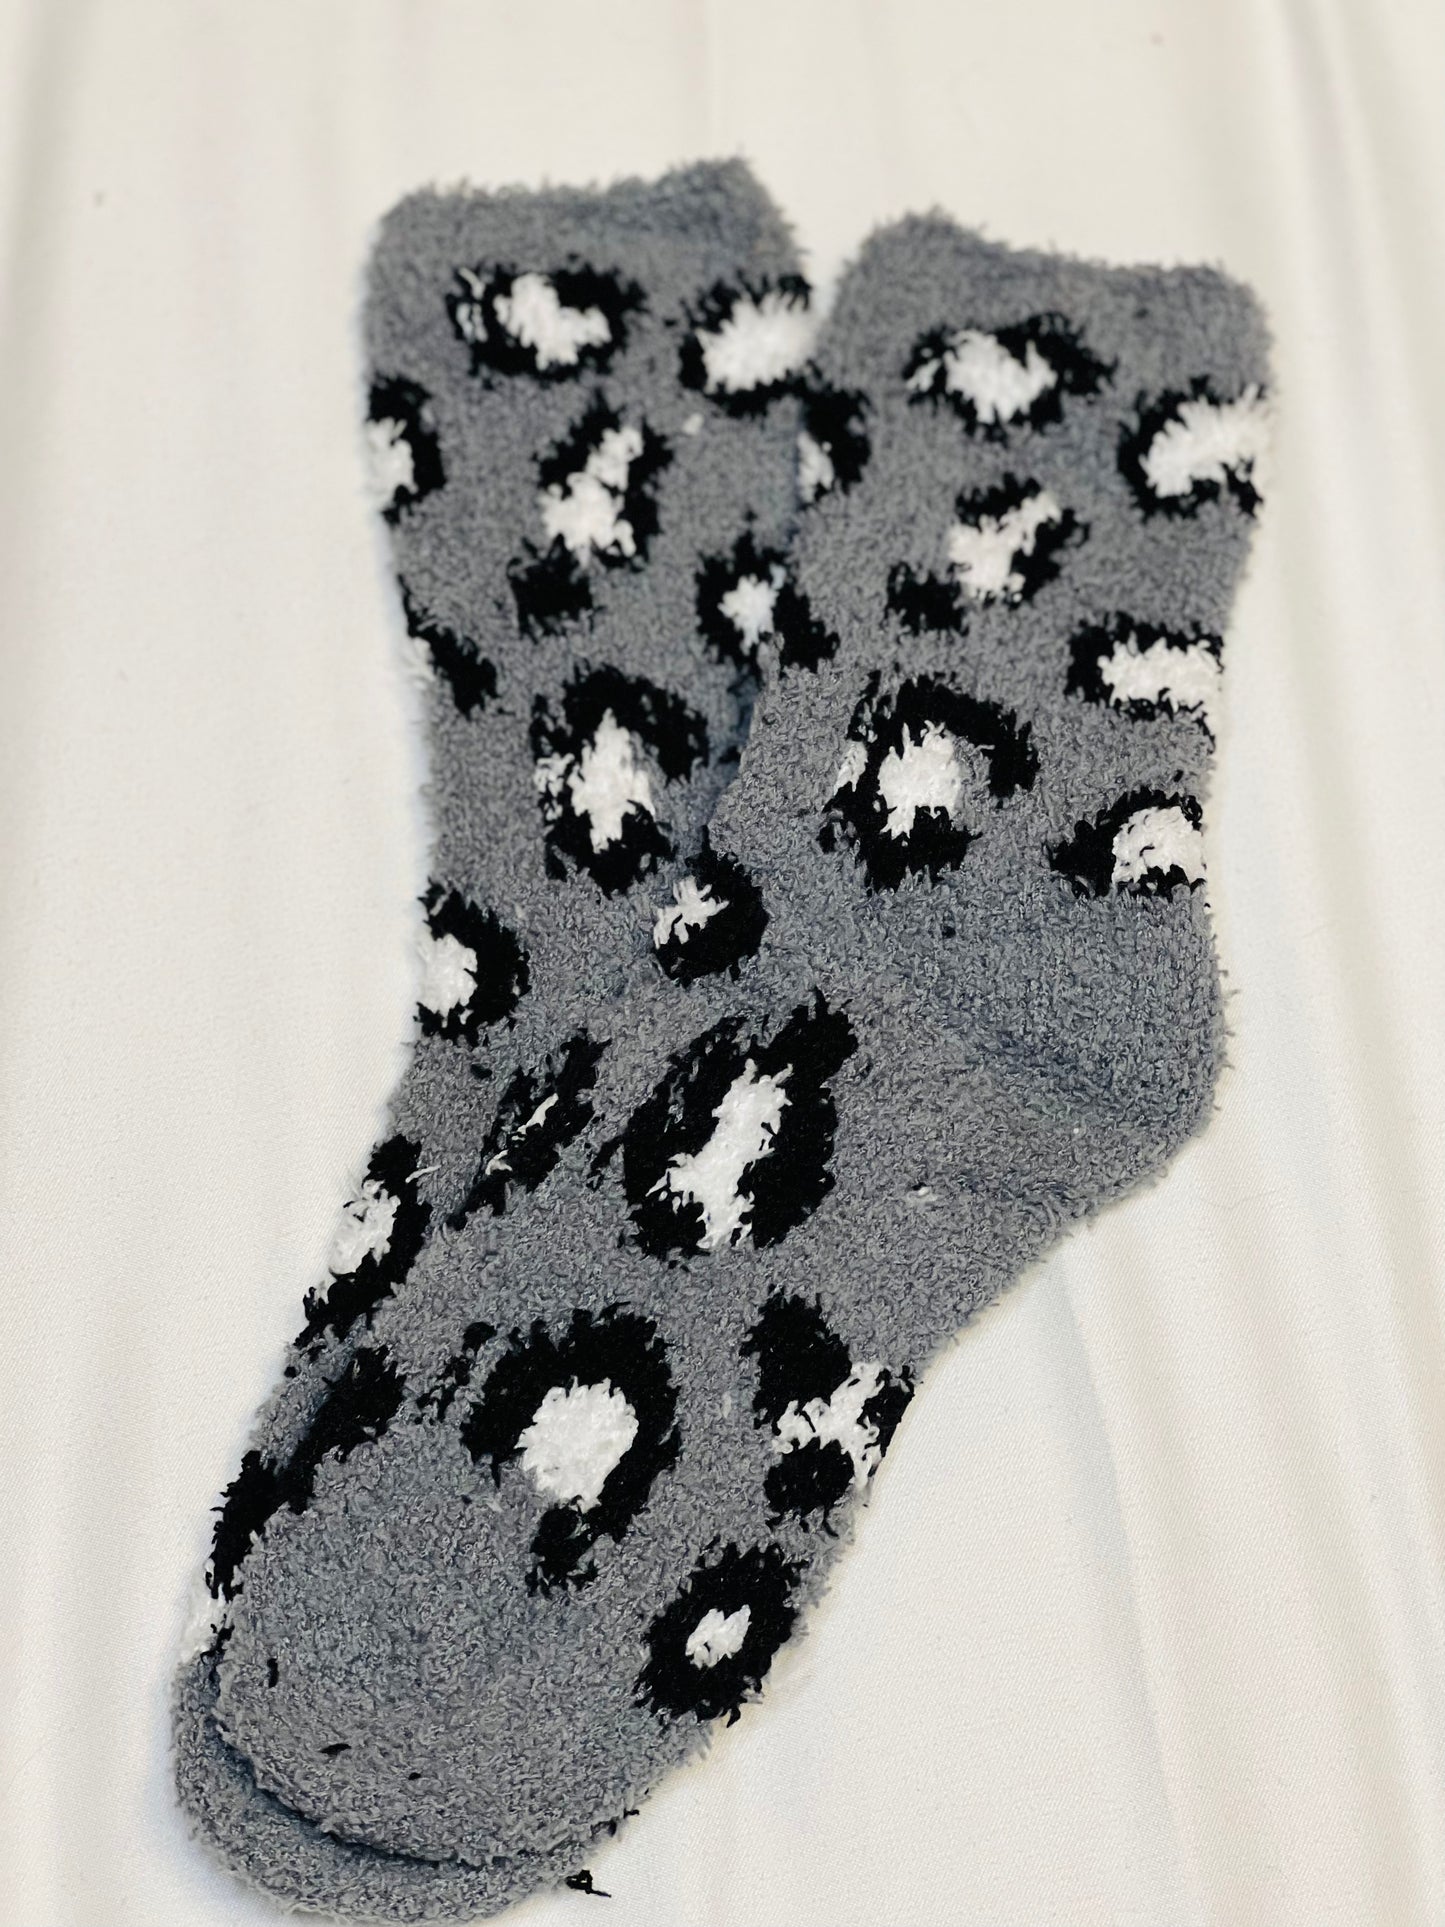 Staying Comfy Fuzzy Leopard Print Socks